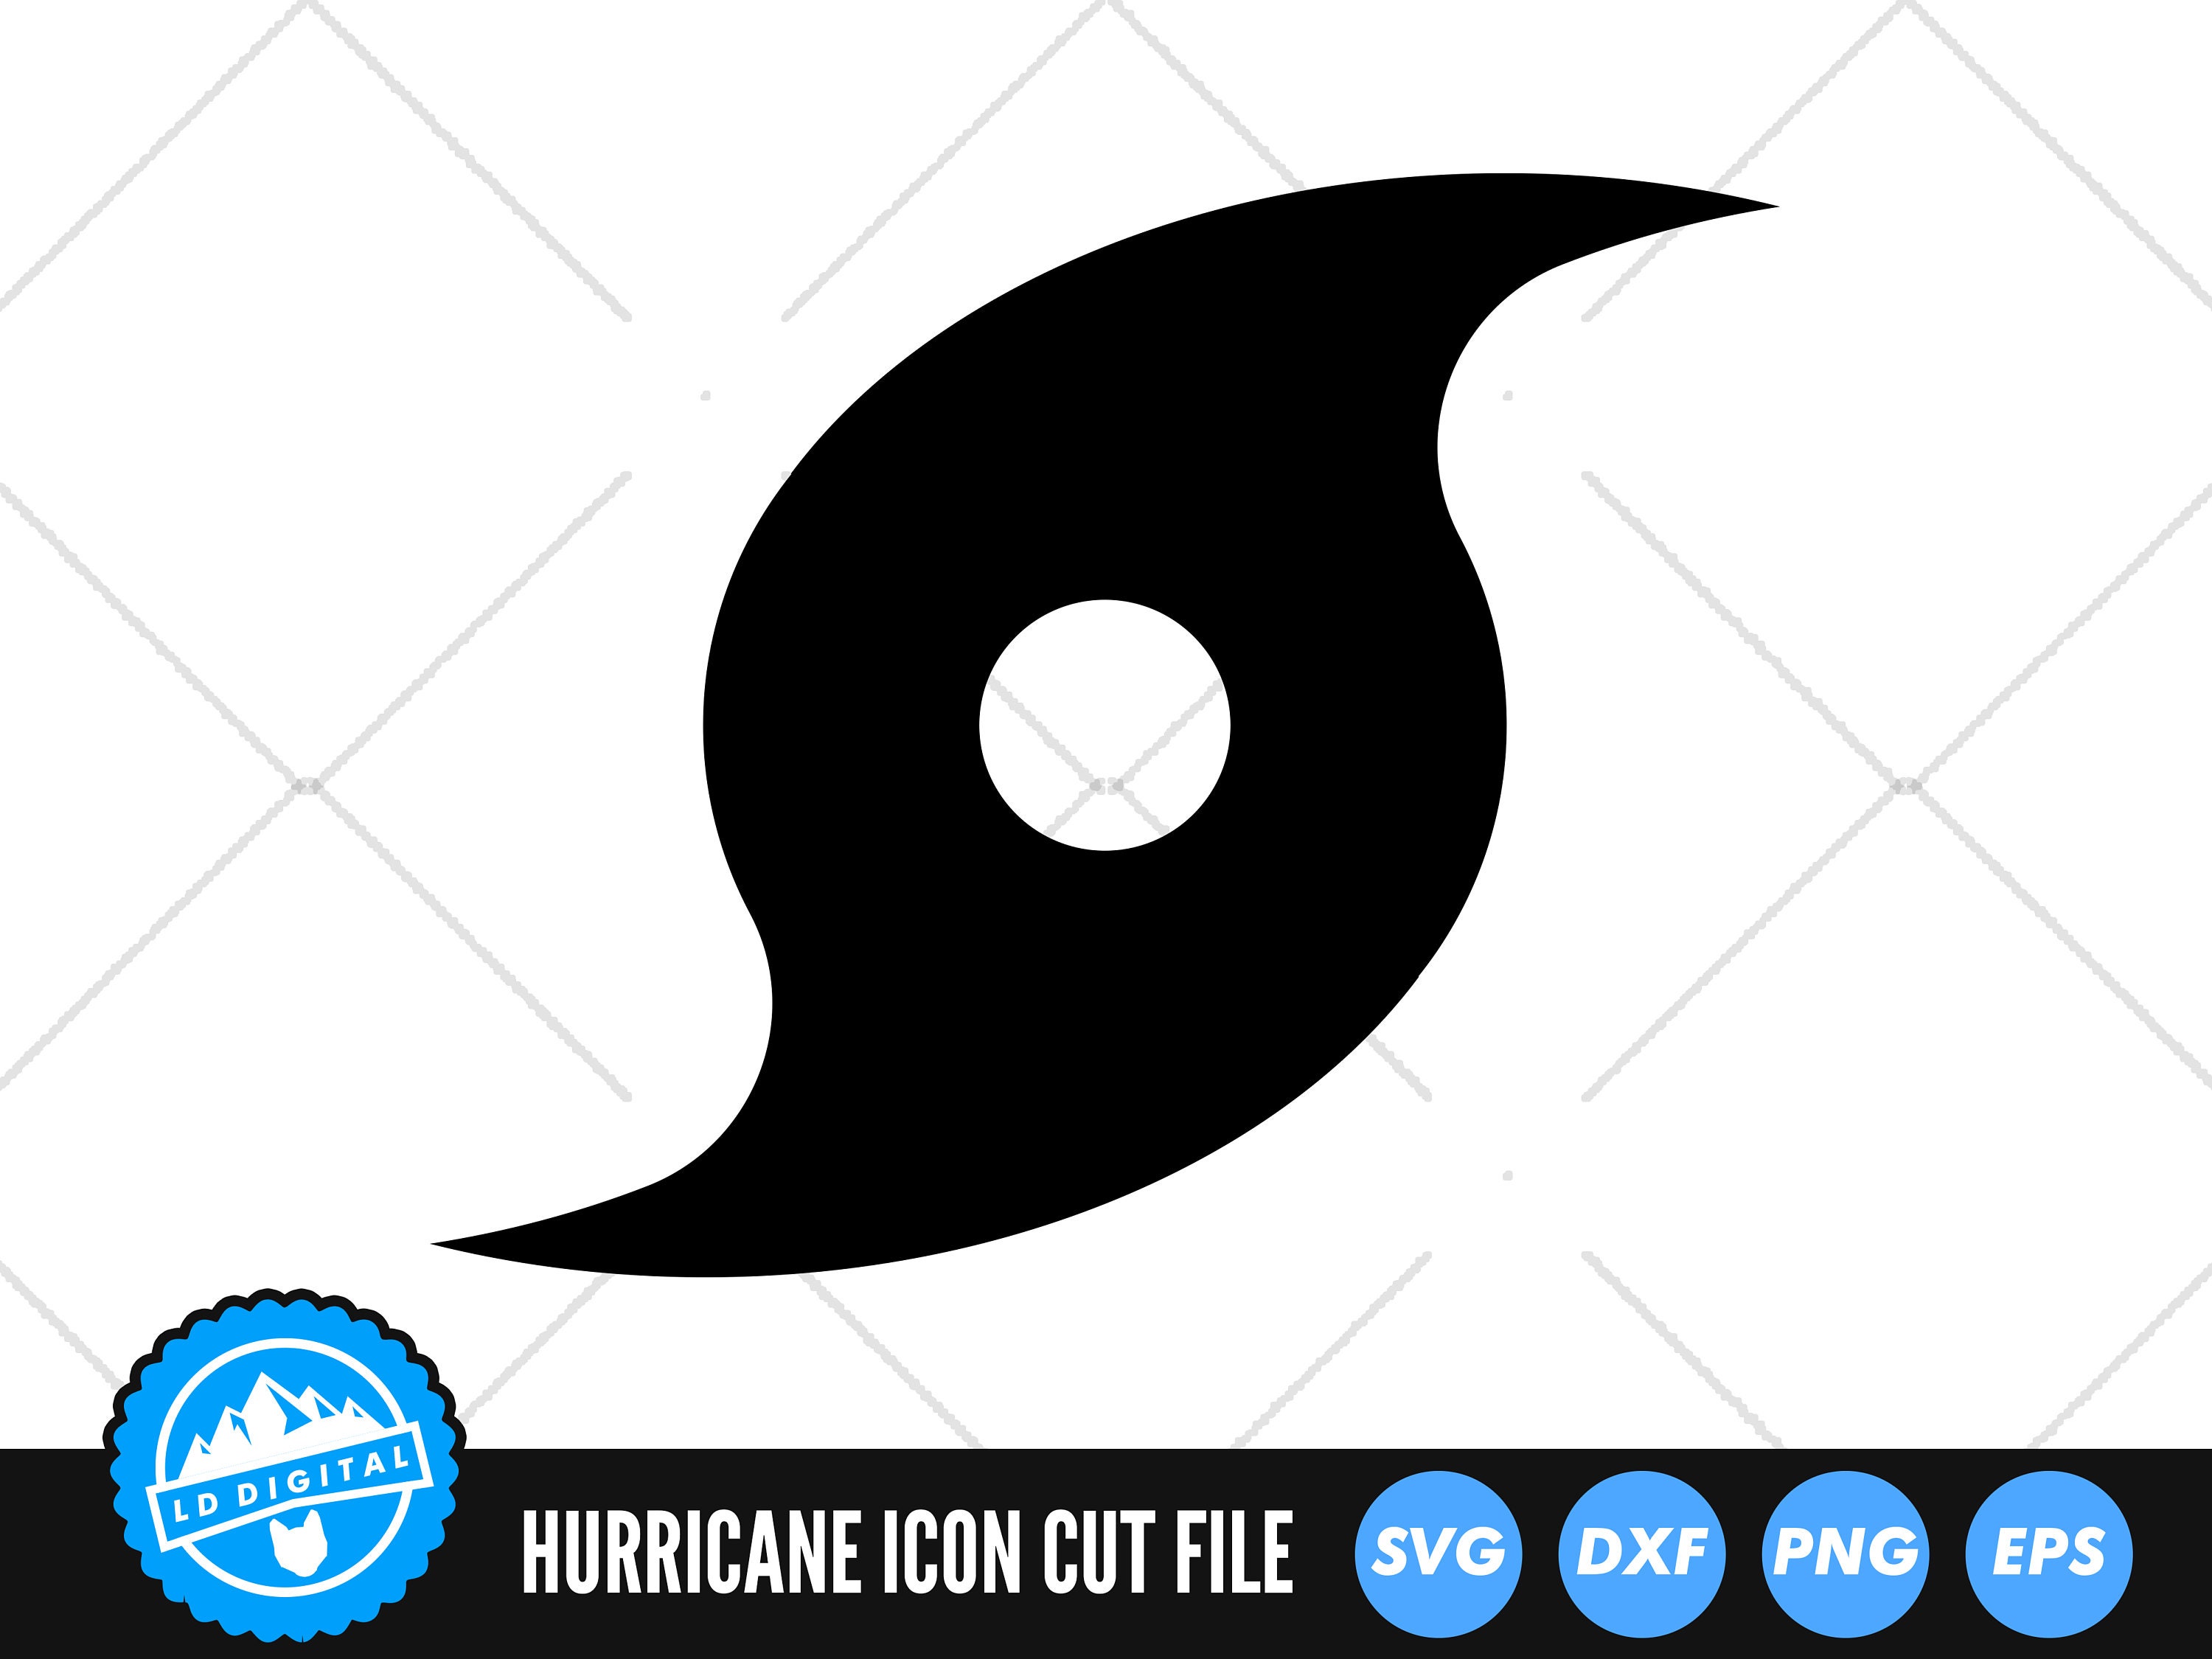 Carolina Hurricanes Logo PNG Transparent & SVG Vector - Freebie Supply